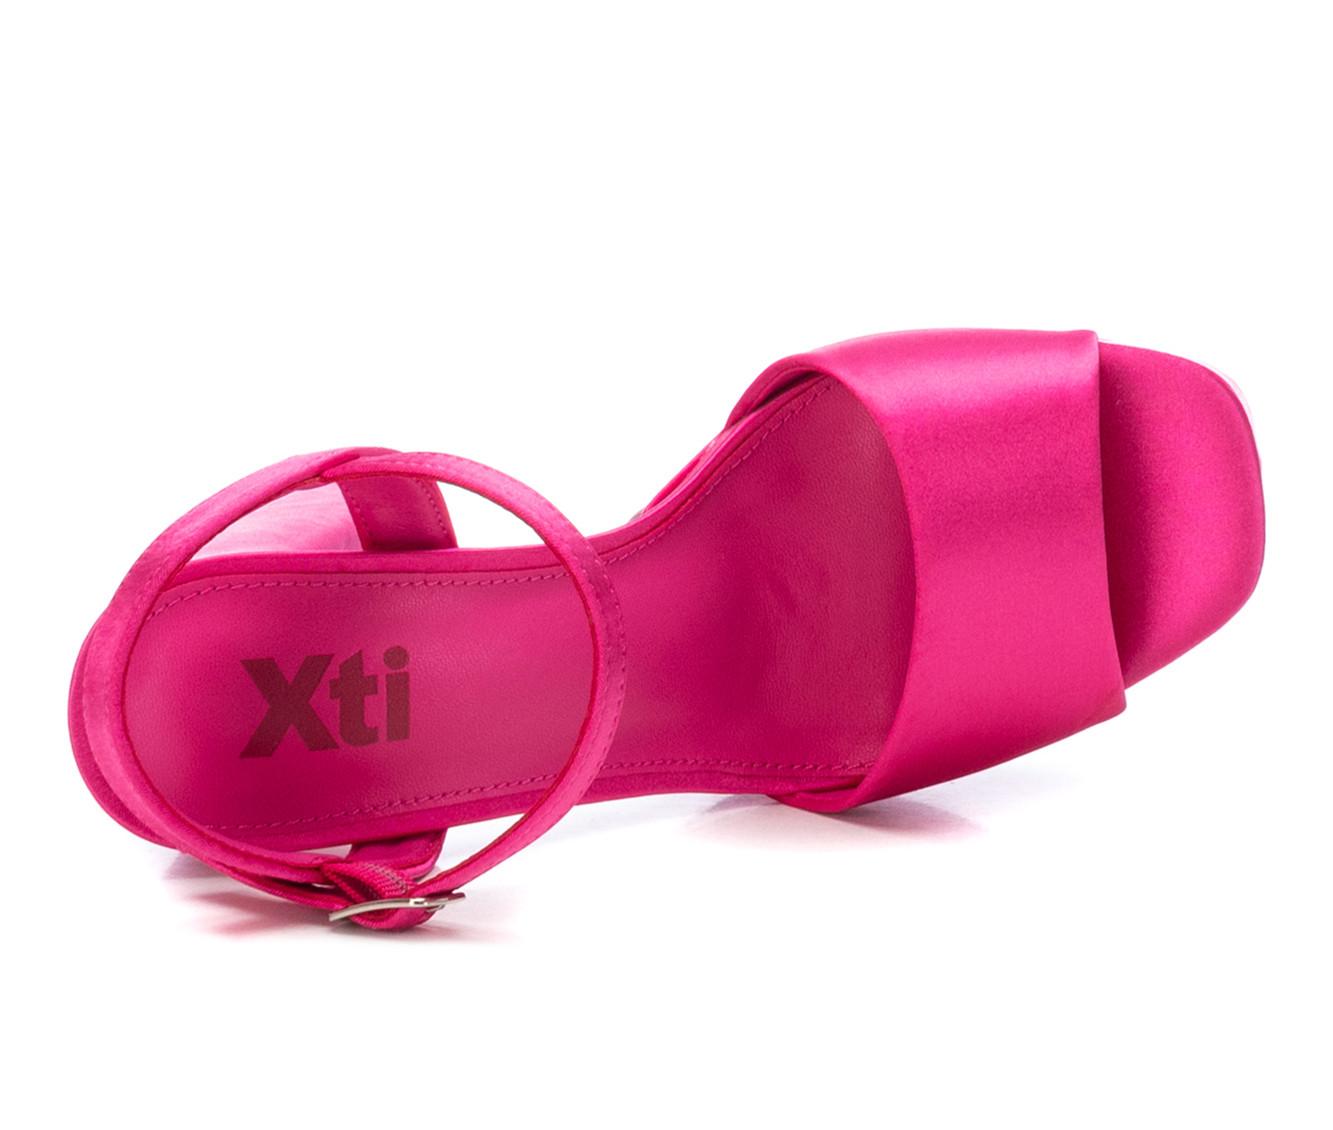 Women's Xti Joyce Platform Dress Sandals